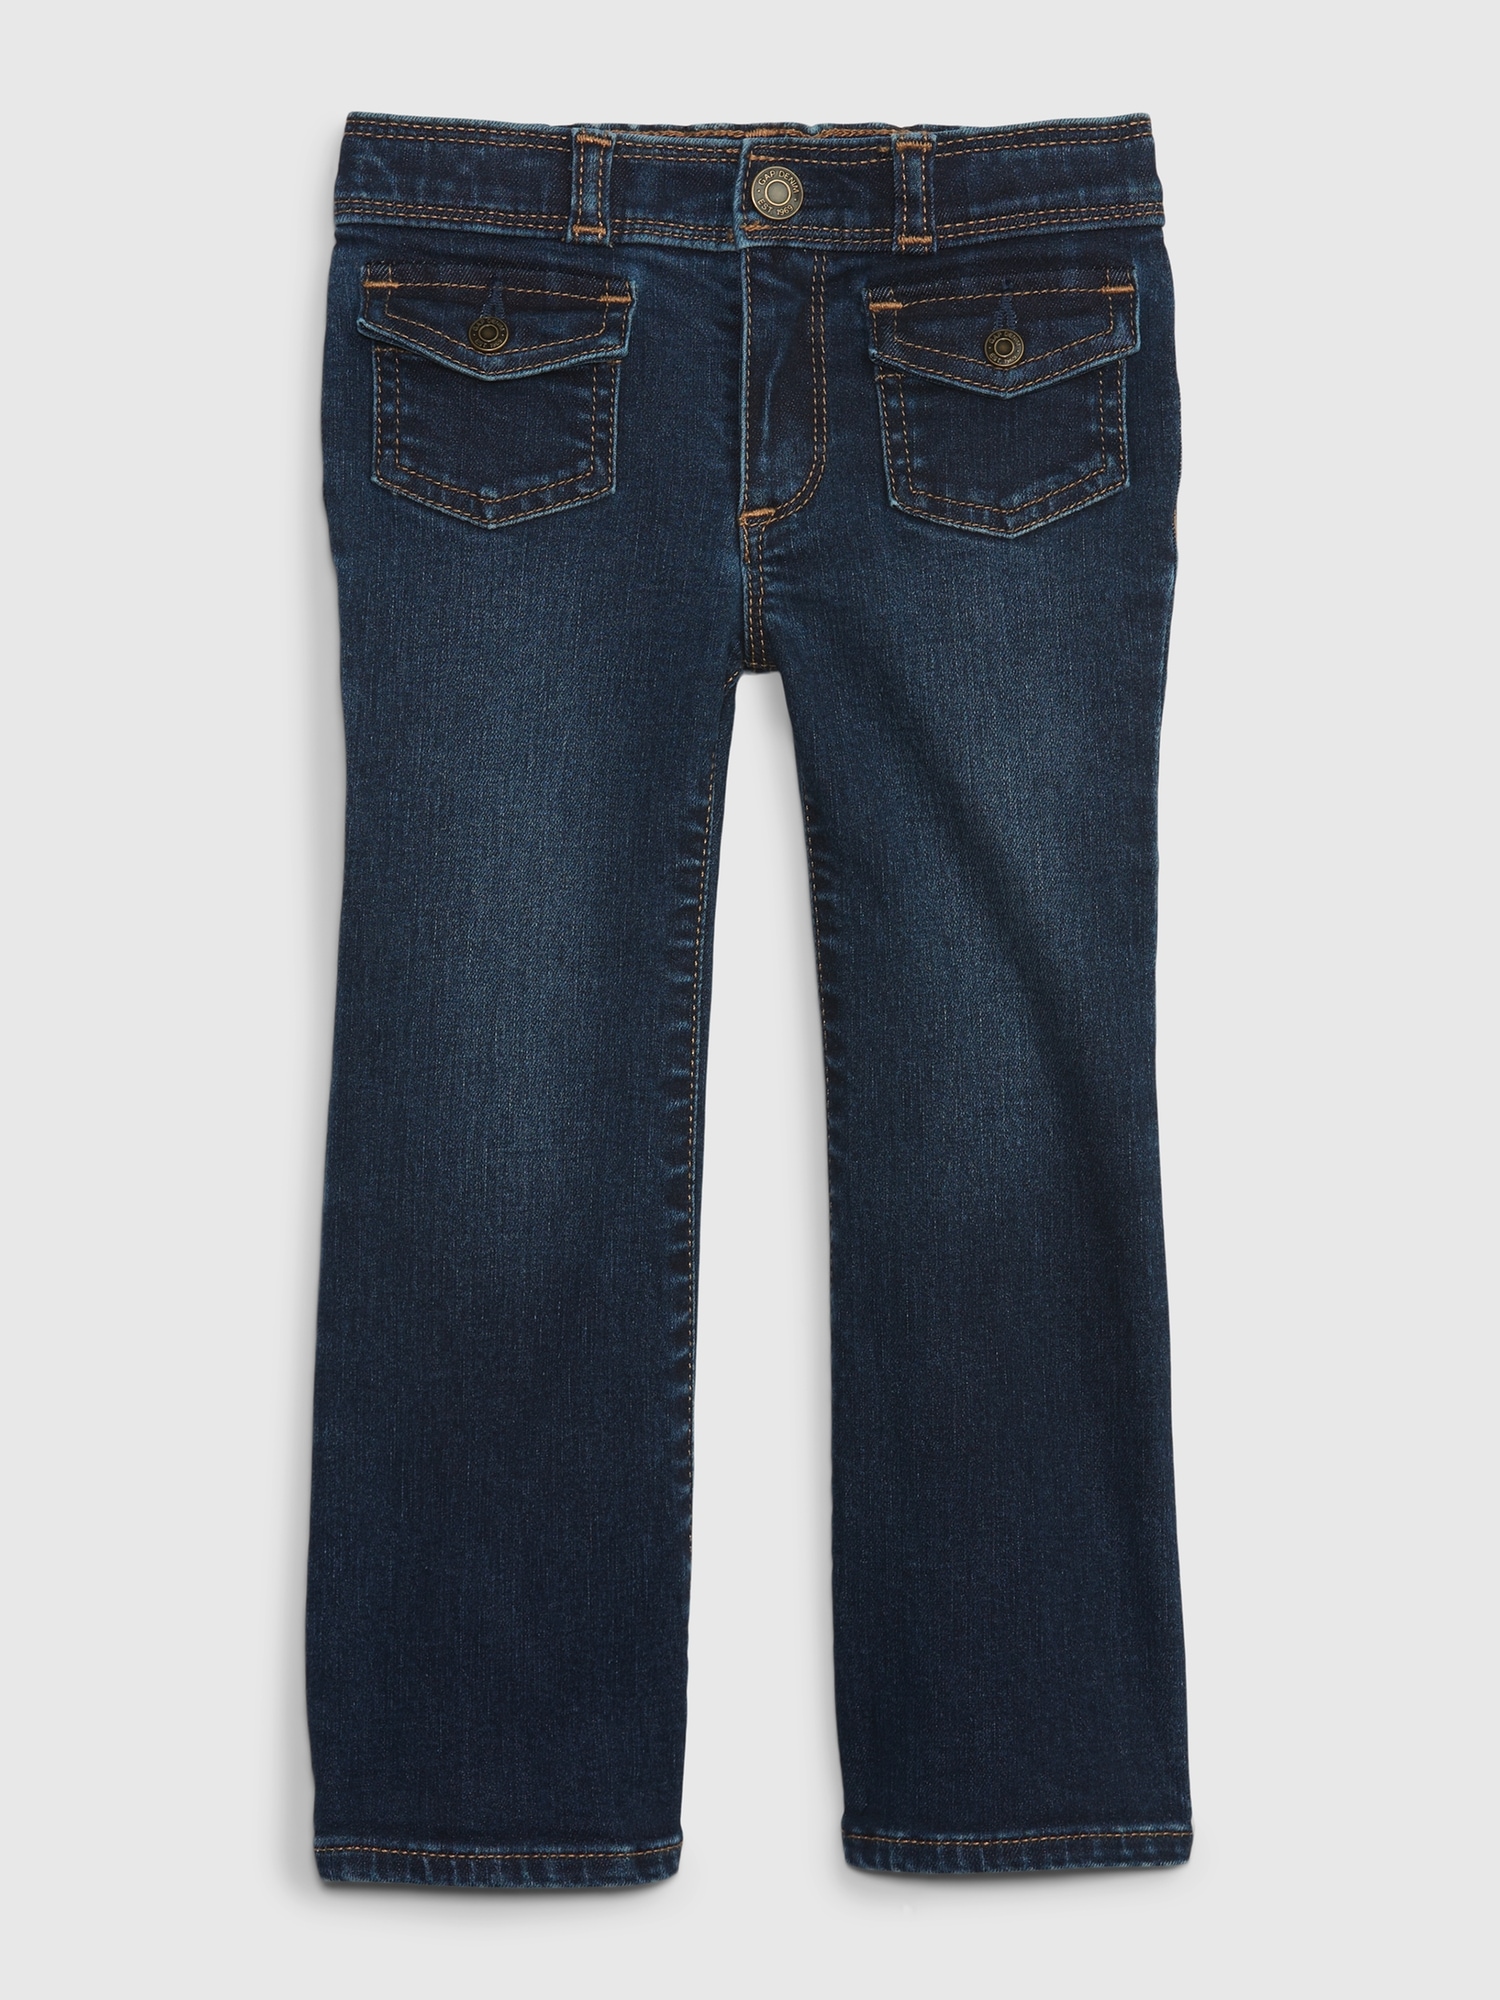 A Light-Wash Jean: Gap High Rise Vintage Flare Jeans